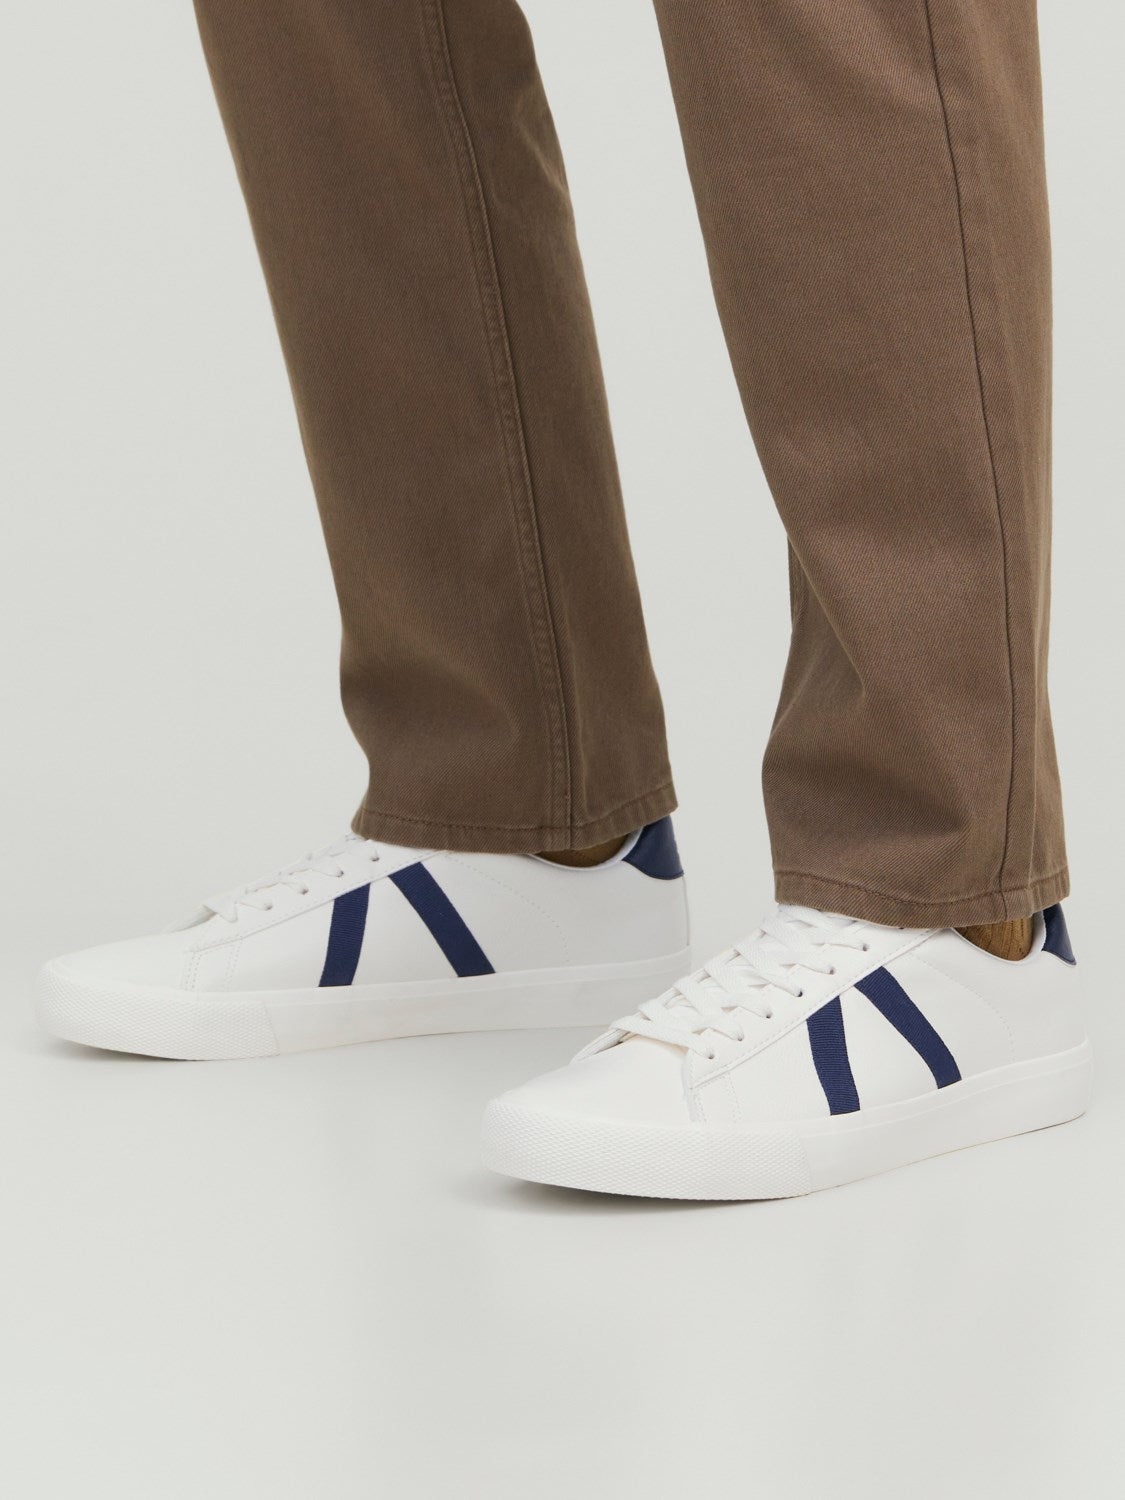 Freeman Bright White Sneakers